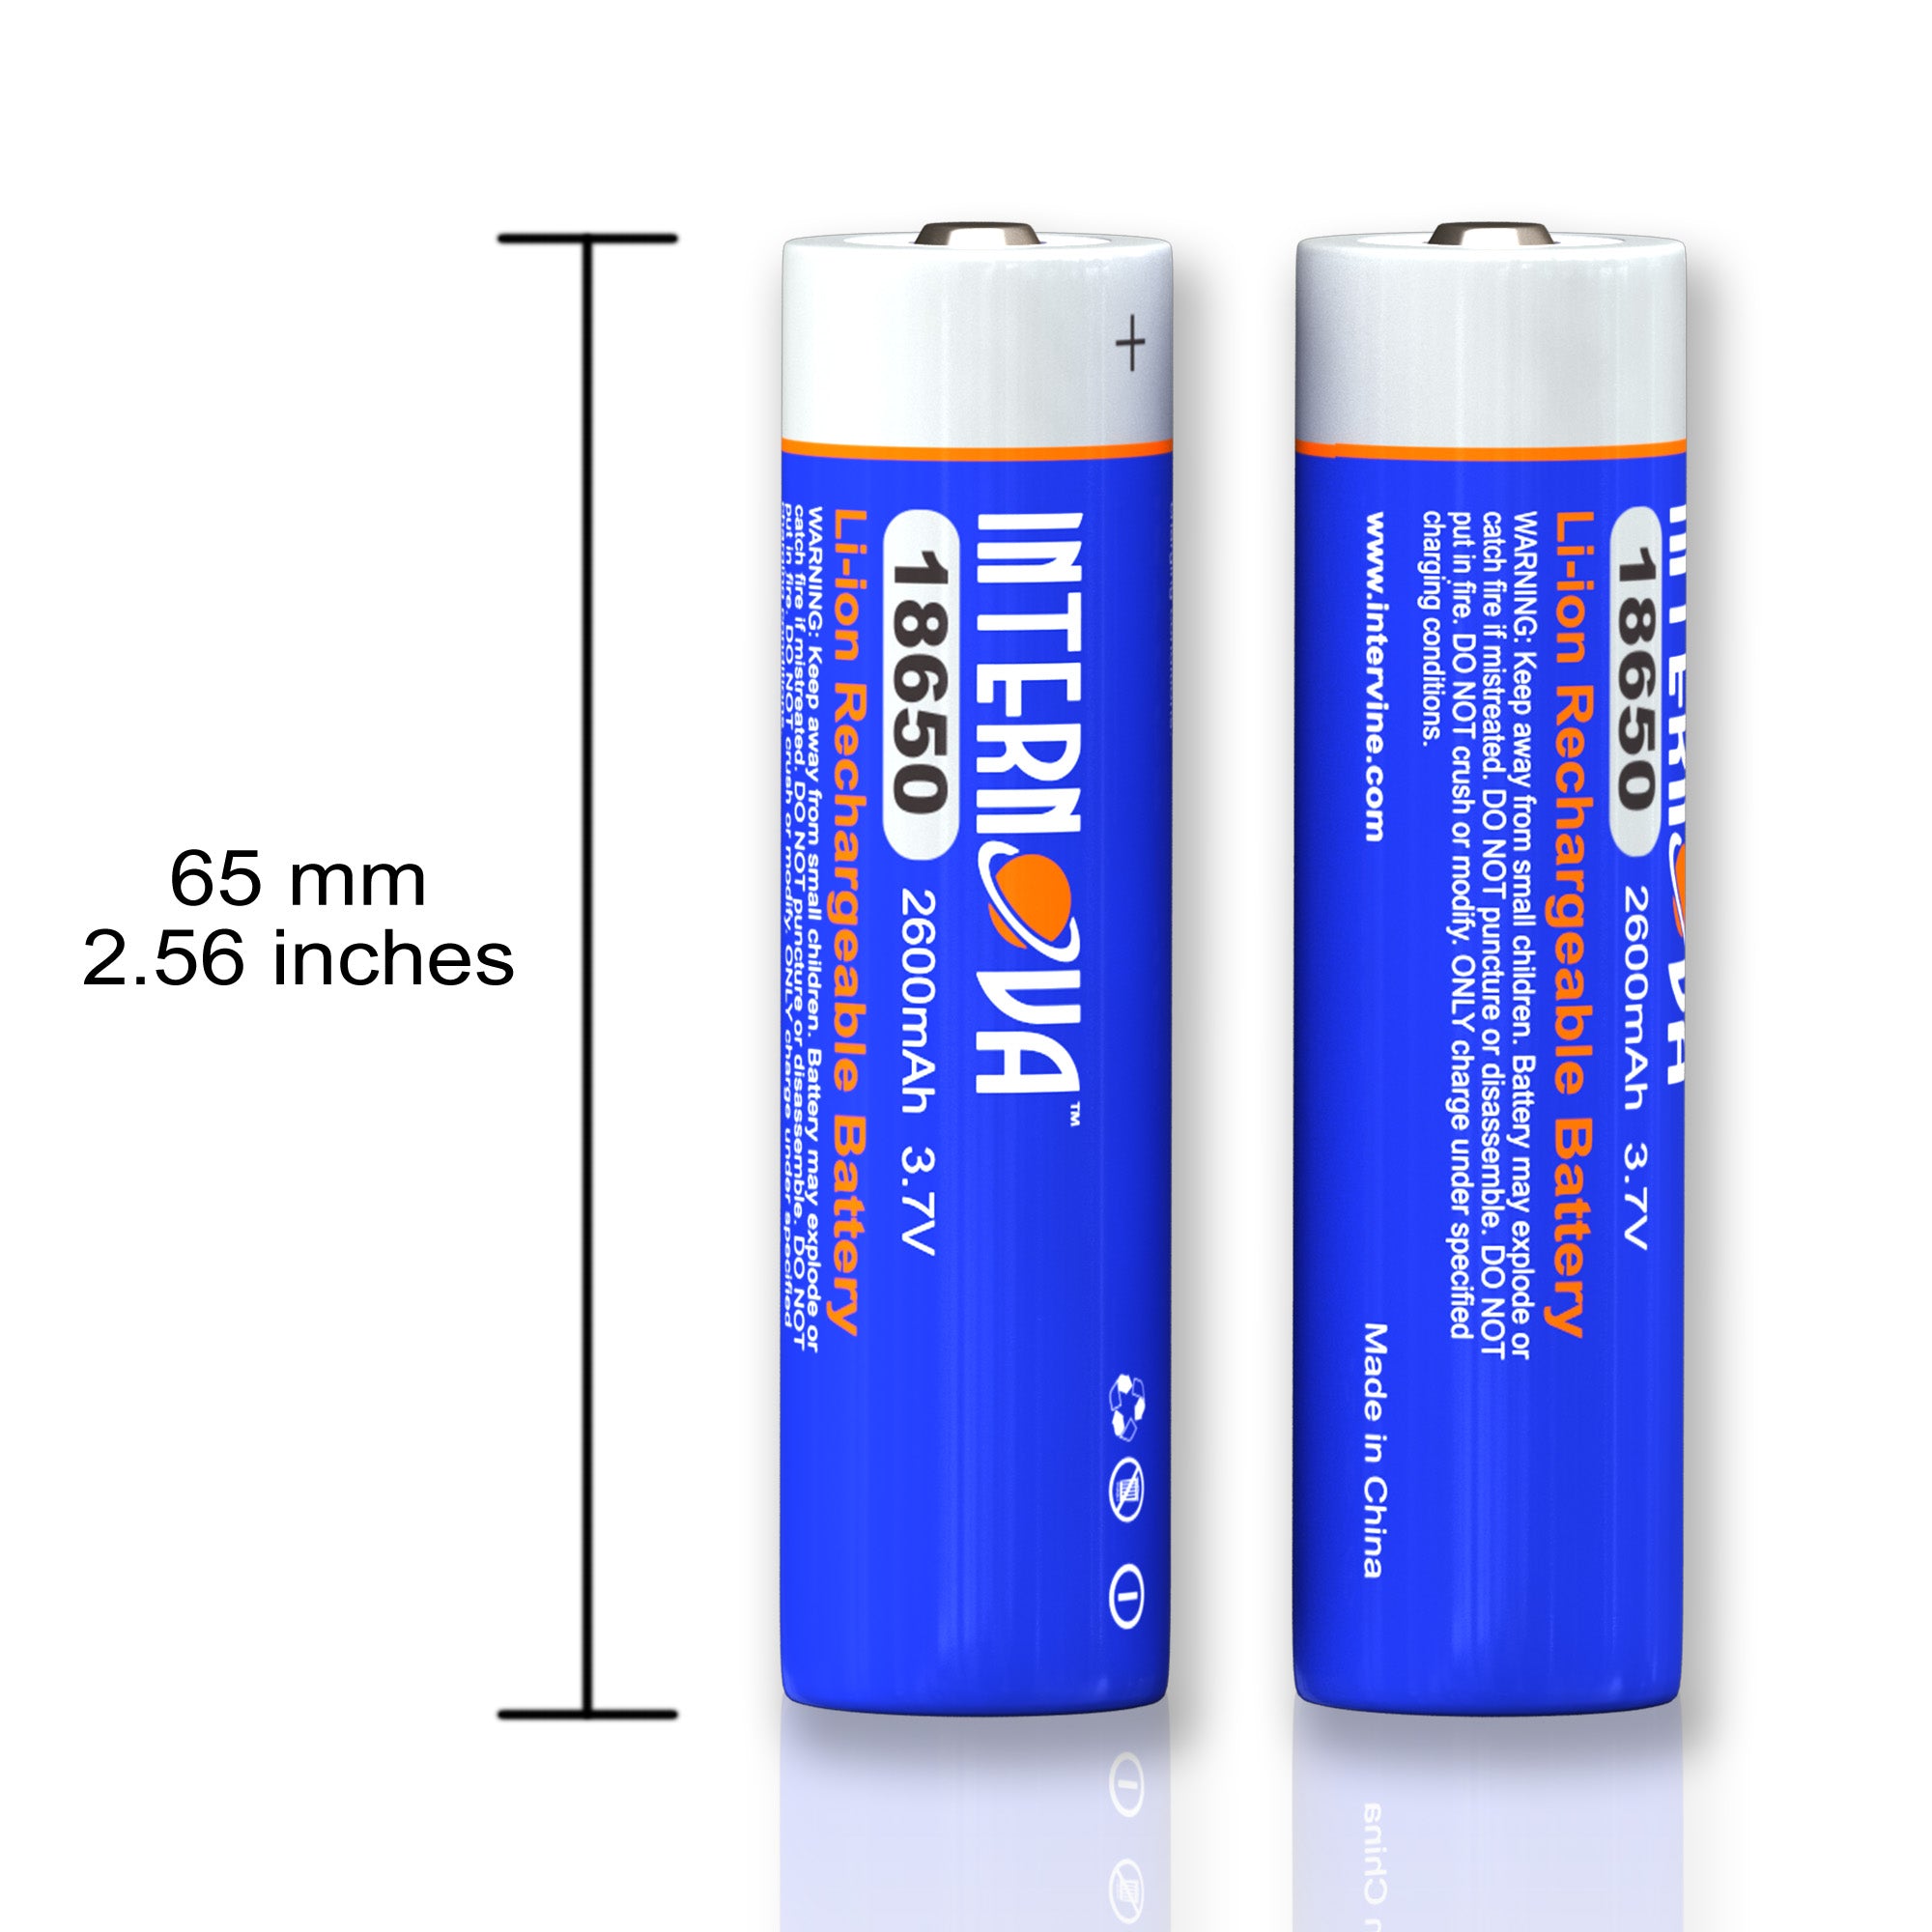 Internova 18650 Batteries 2-Pack, Li-ion Rechargeable, 2600mAh 3.7V Button Top